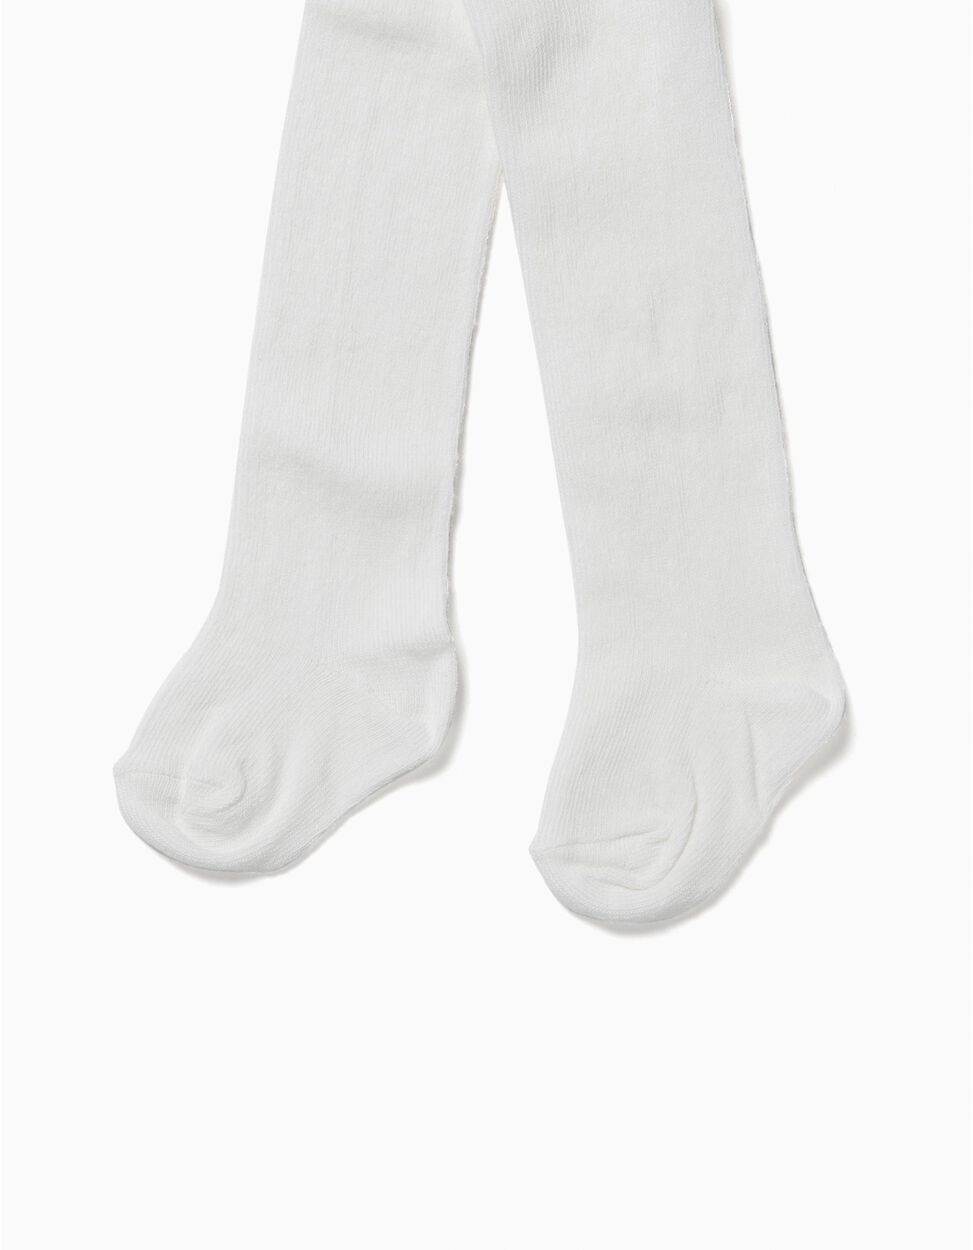 High-Waist Knit Tights for Newborn, White FASHION | Zippy ...